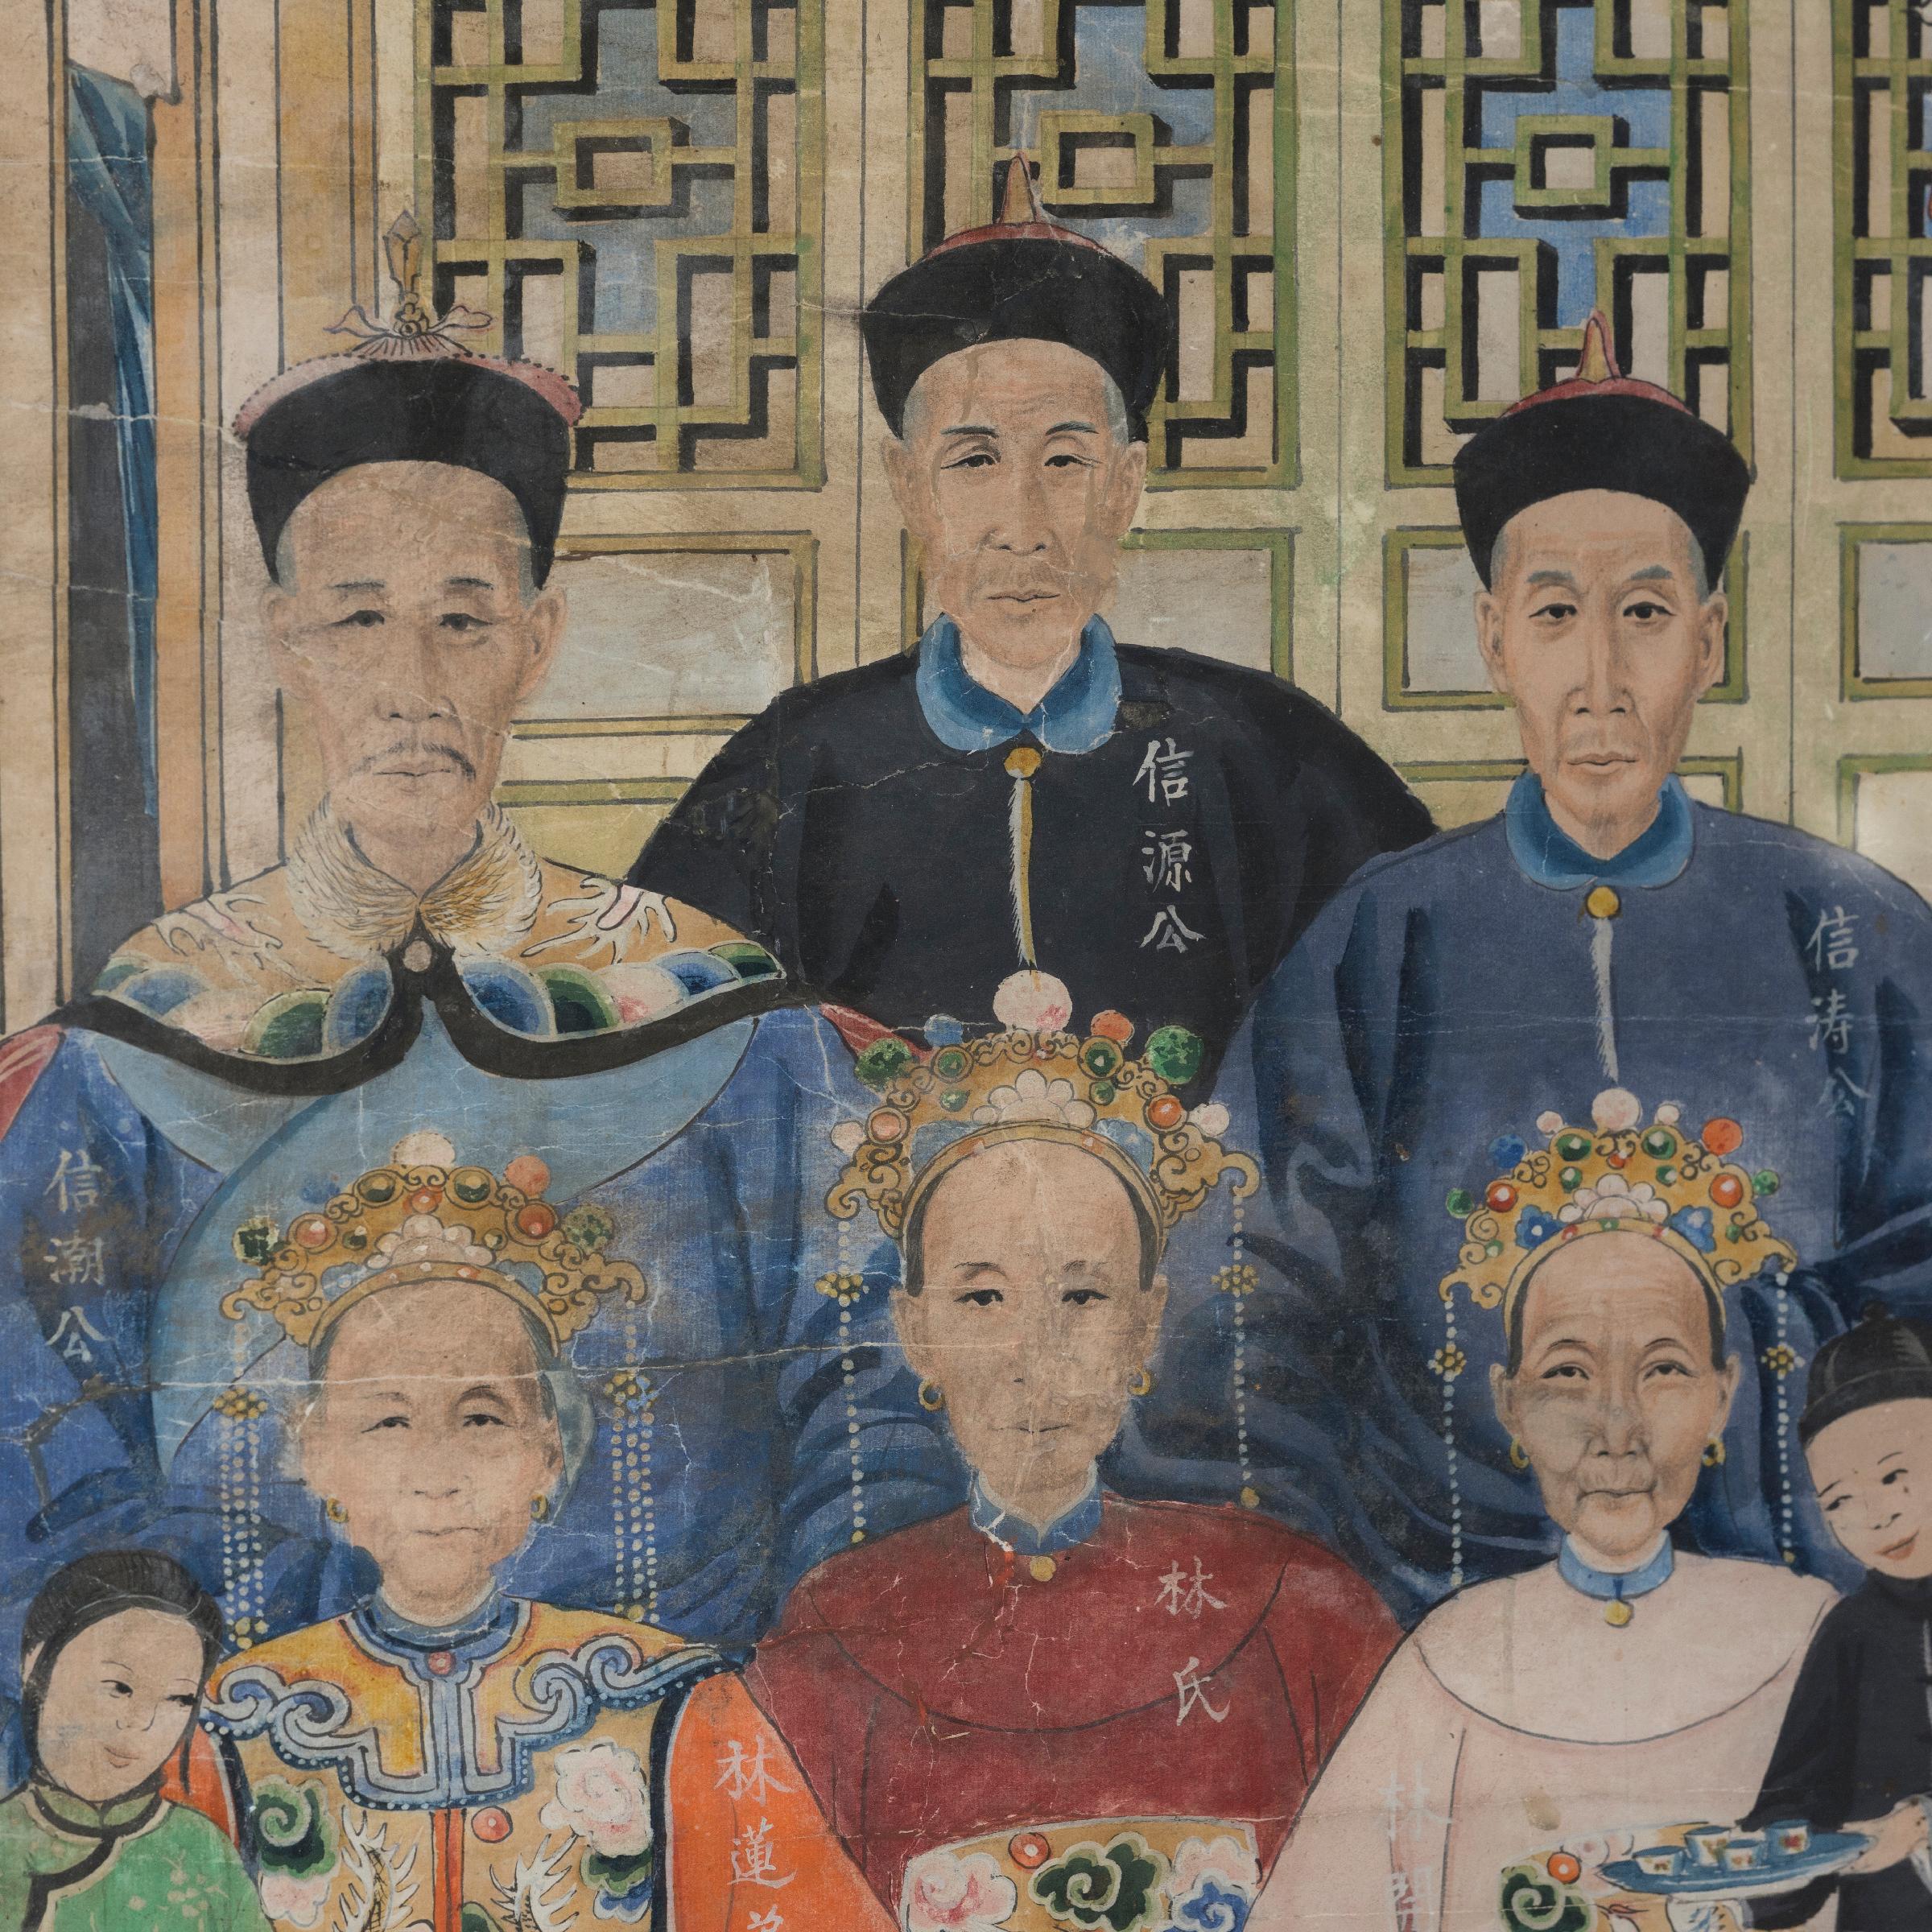 Qing Framed Chinese Ancestor Portrait, c. 1850